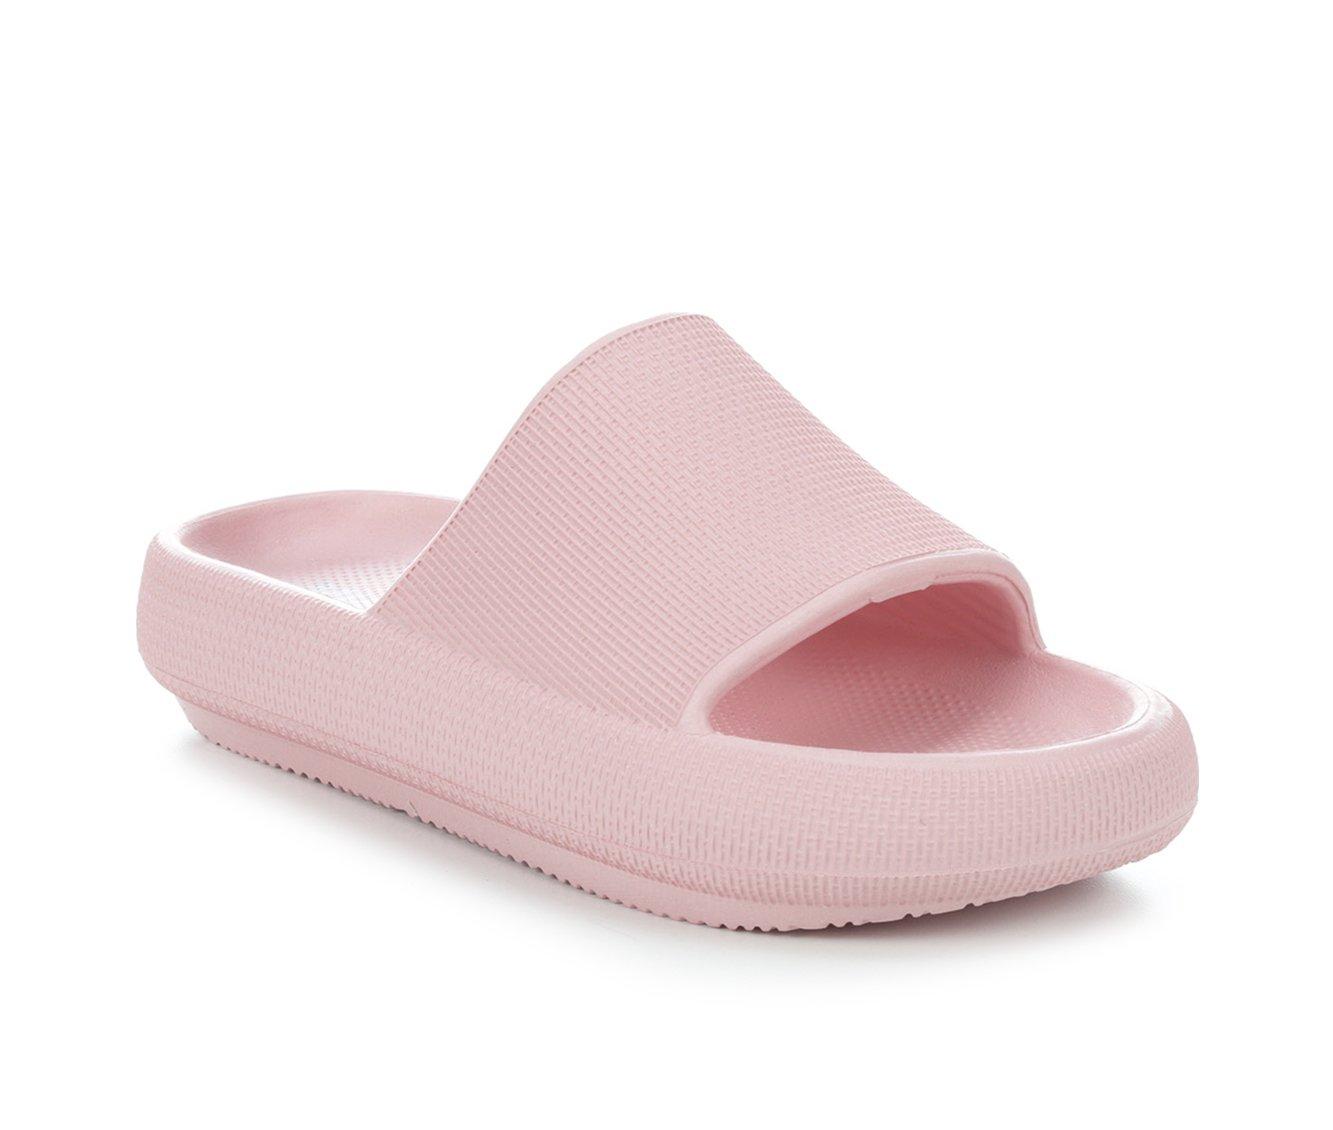 Buy online Women Textured Pink S Flip Flop from footwear for Women